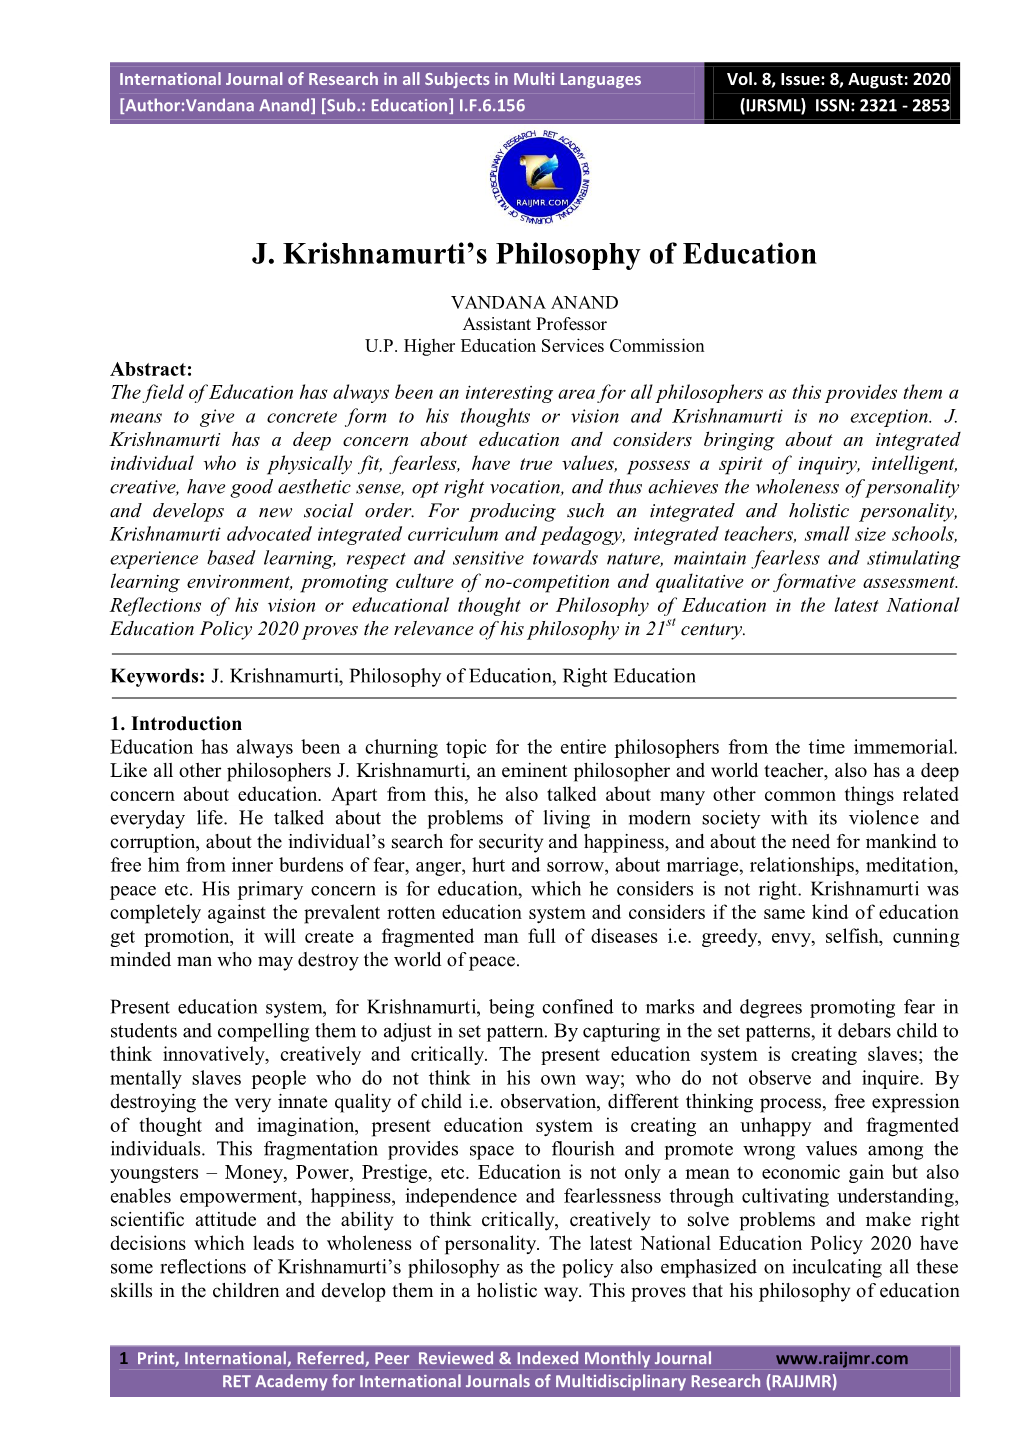 J. Krishnamurti's Philosophy of Education